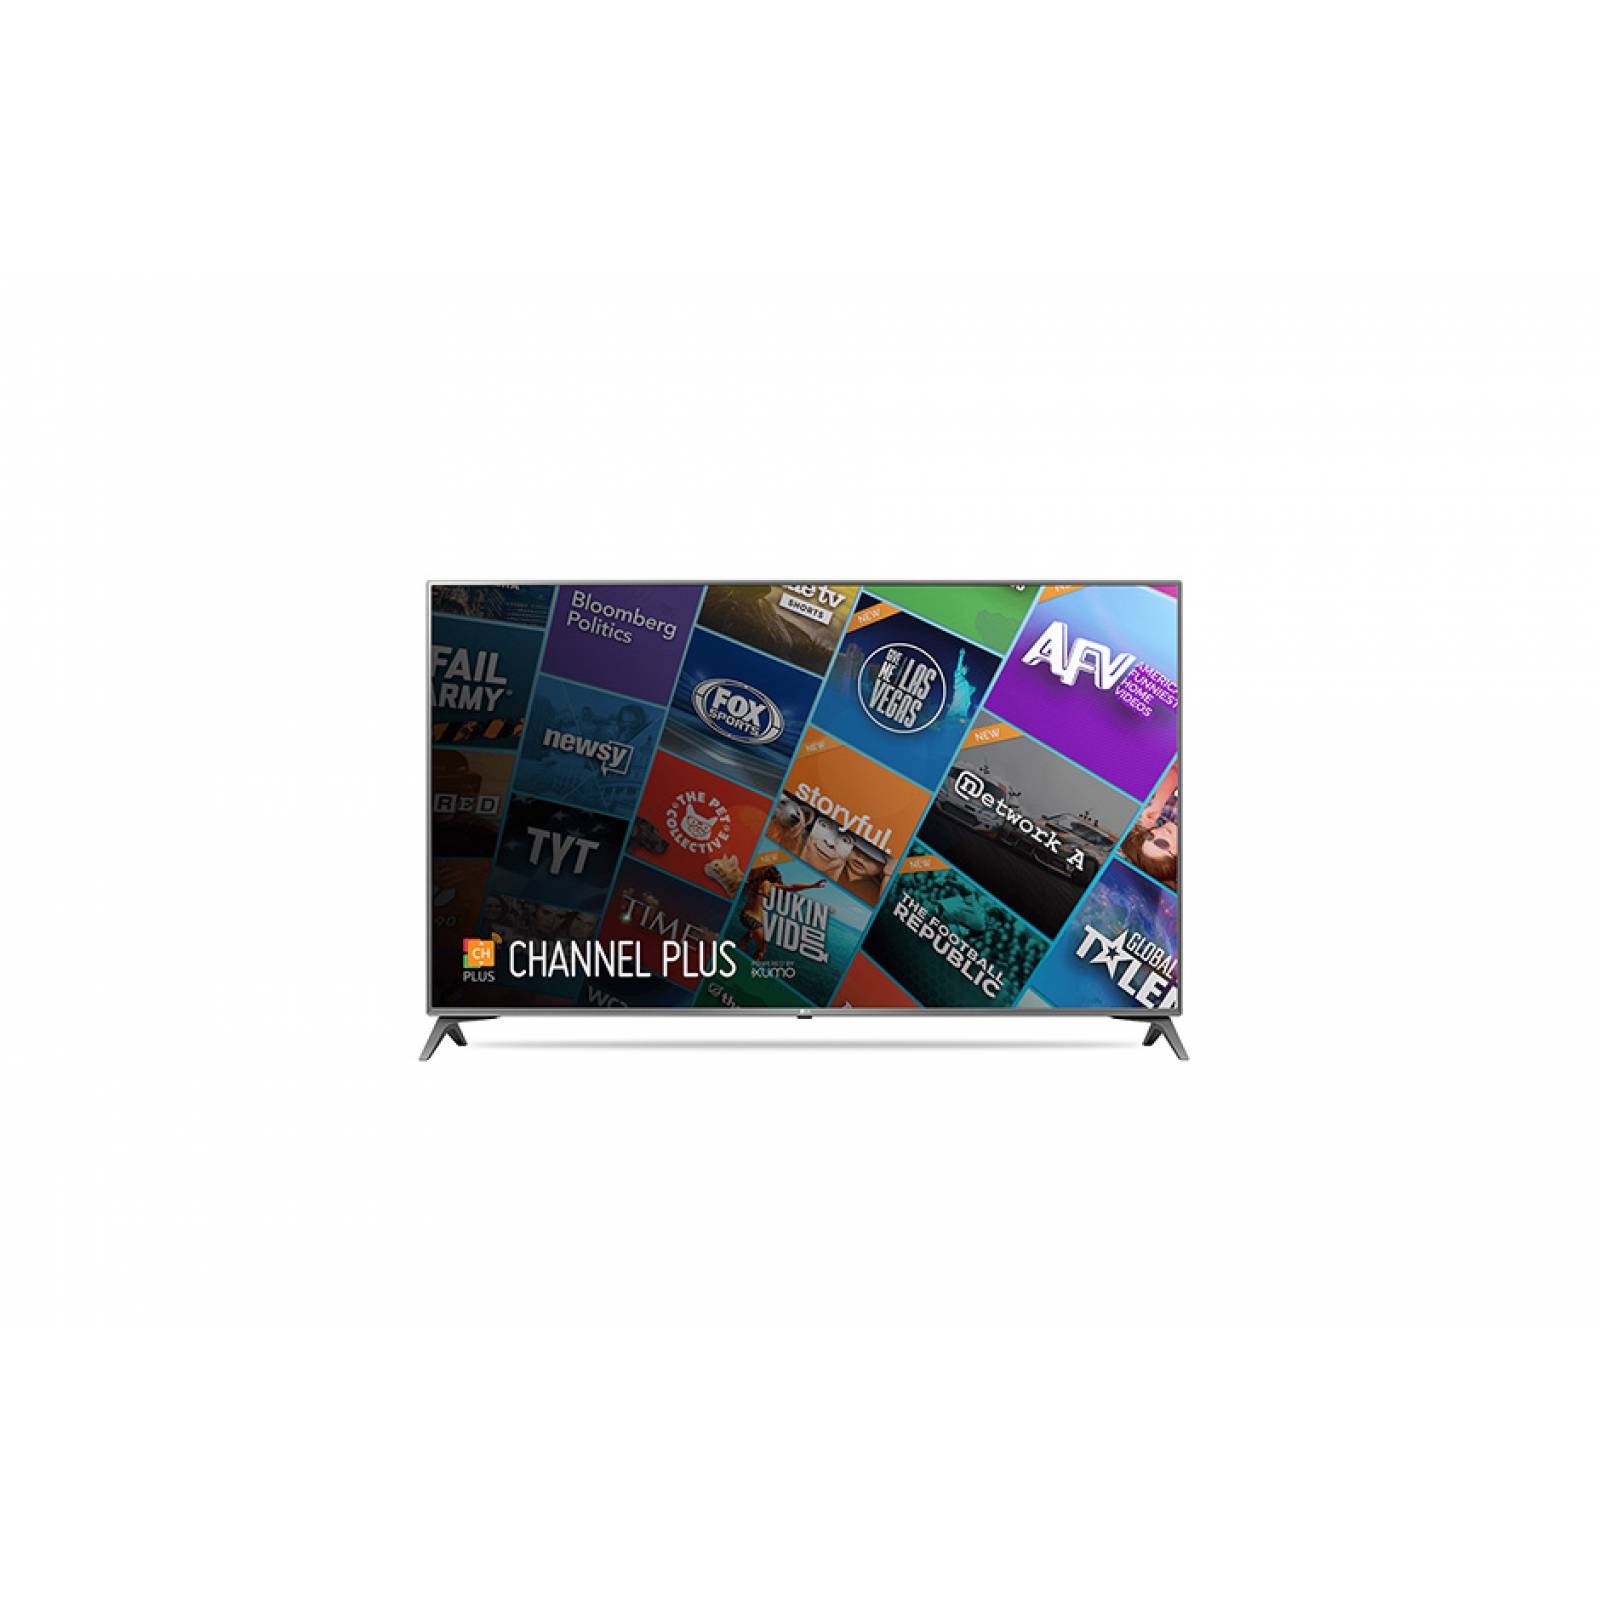 Smart Tv LG 65 Led 4k UHD USB HDMI 65UJ6540 - Reacondicionado